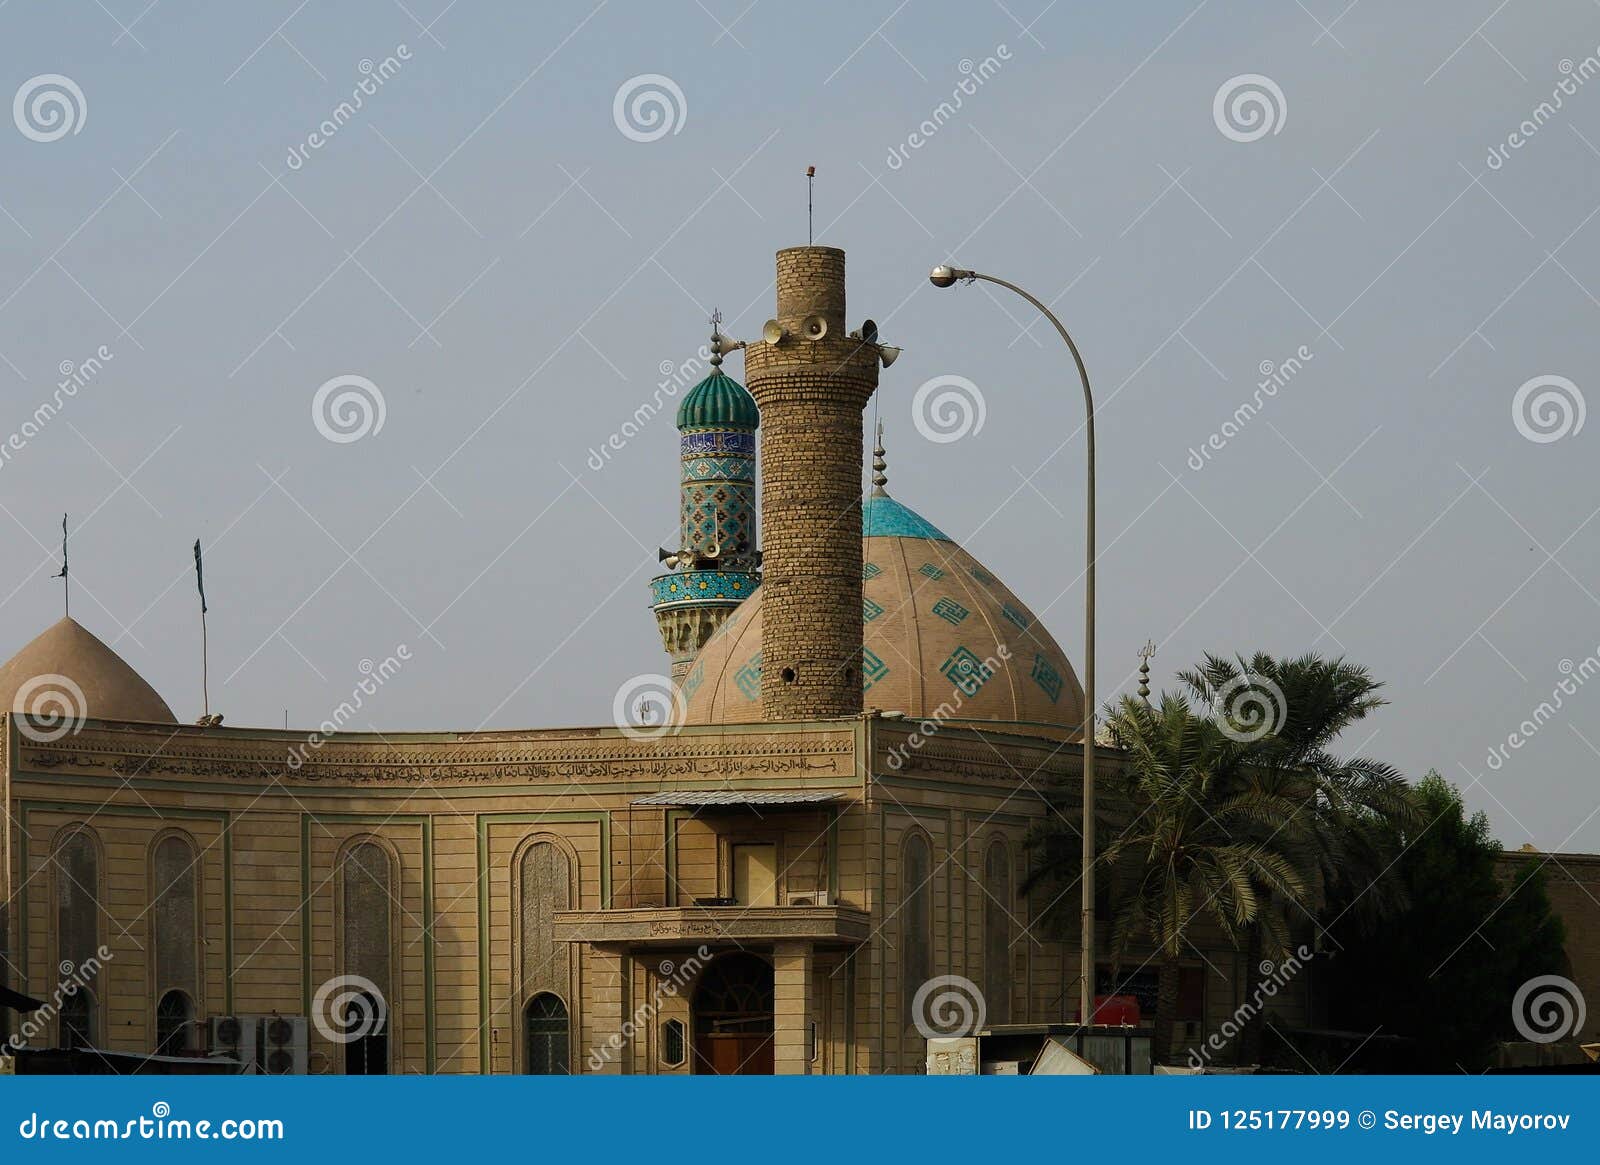 mosque and holy shrine of imam reza , basra, iraq